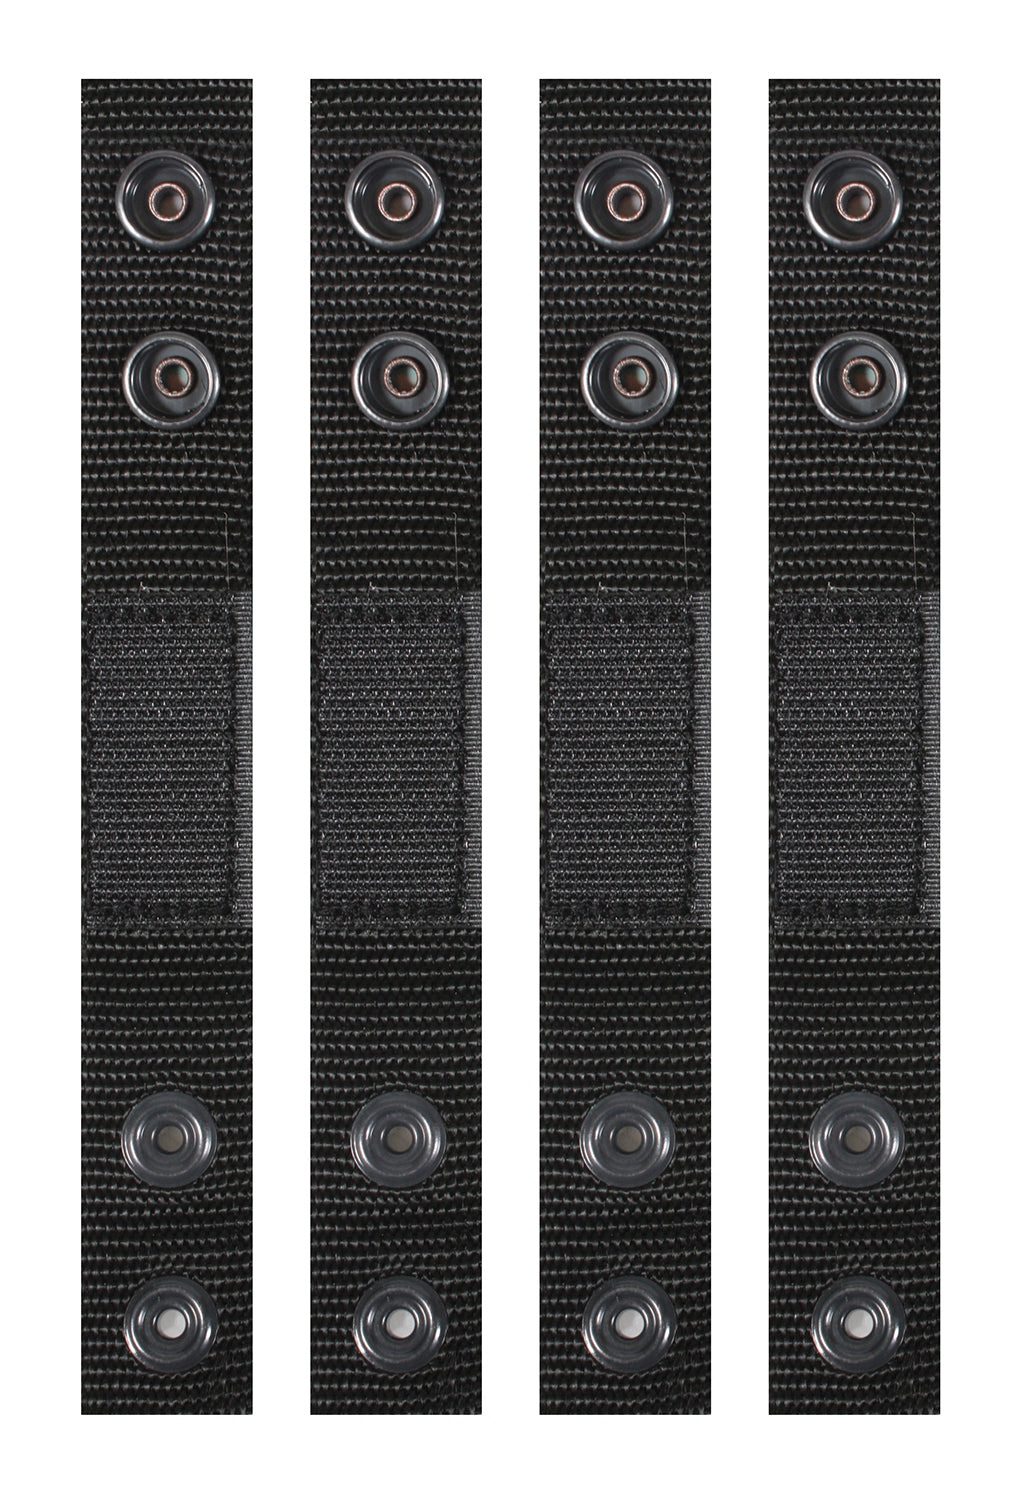 Rothco Enhanced Belt Keepers - Set of 4